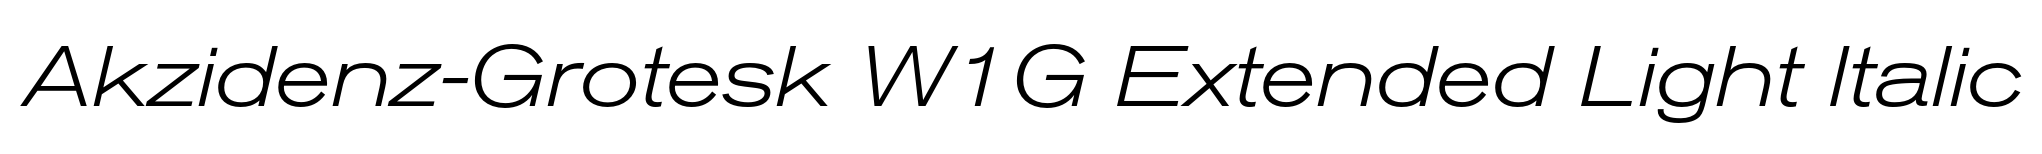 Akzidenz-Grotesk W1G Extended Light Italic image